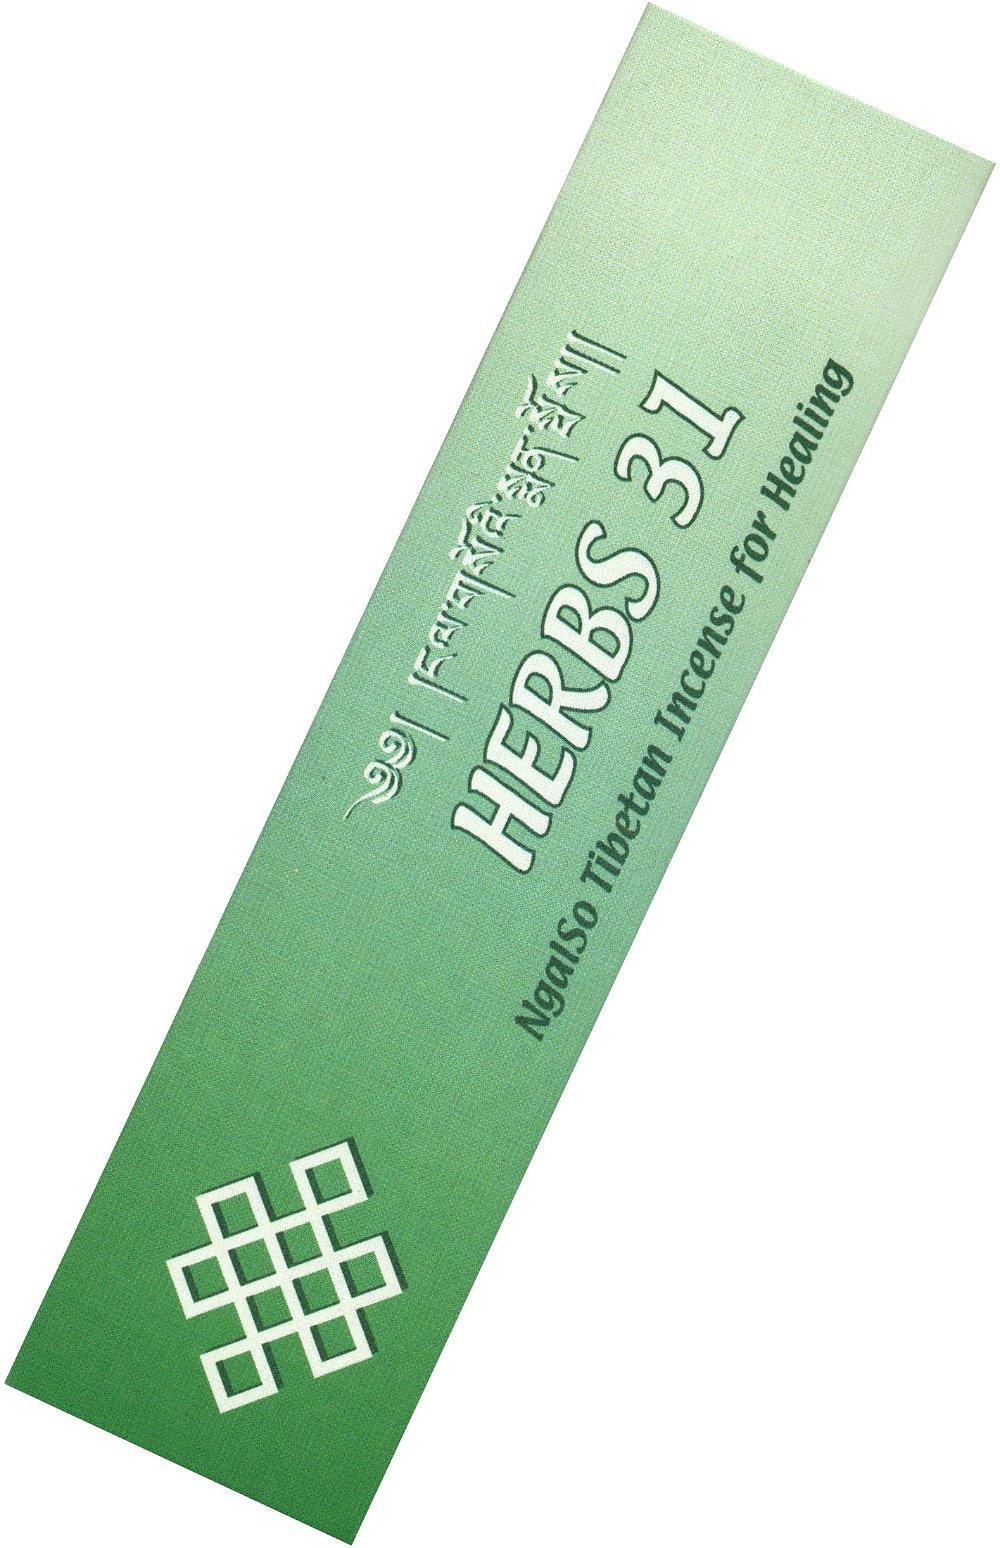 Благовоние Herbs-31 (Agar-31 / Агар-31), 20 палочек по 13,5 см, Herbs 31